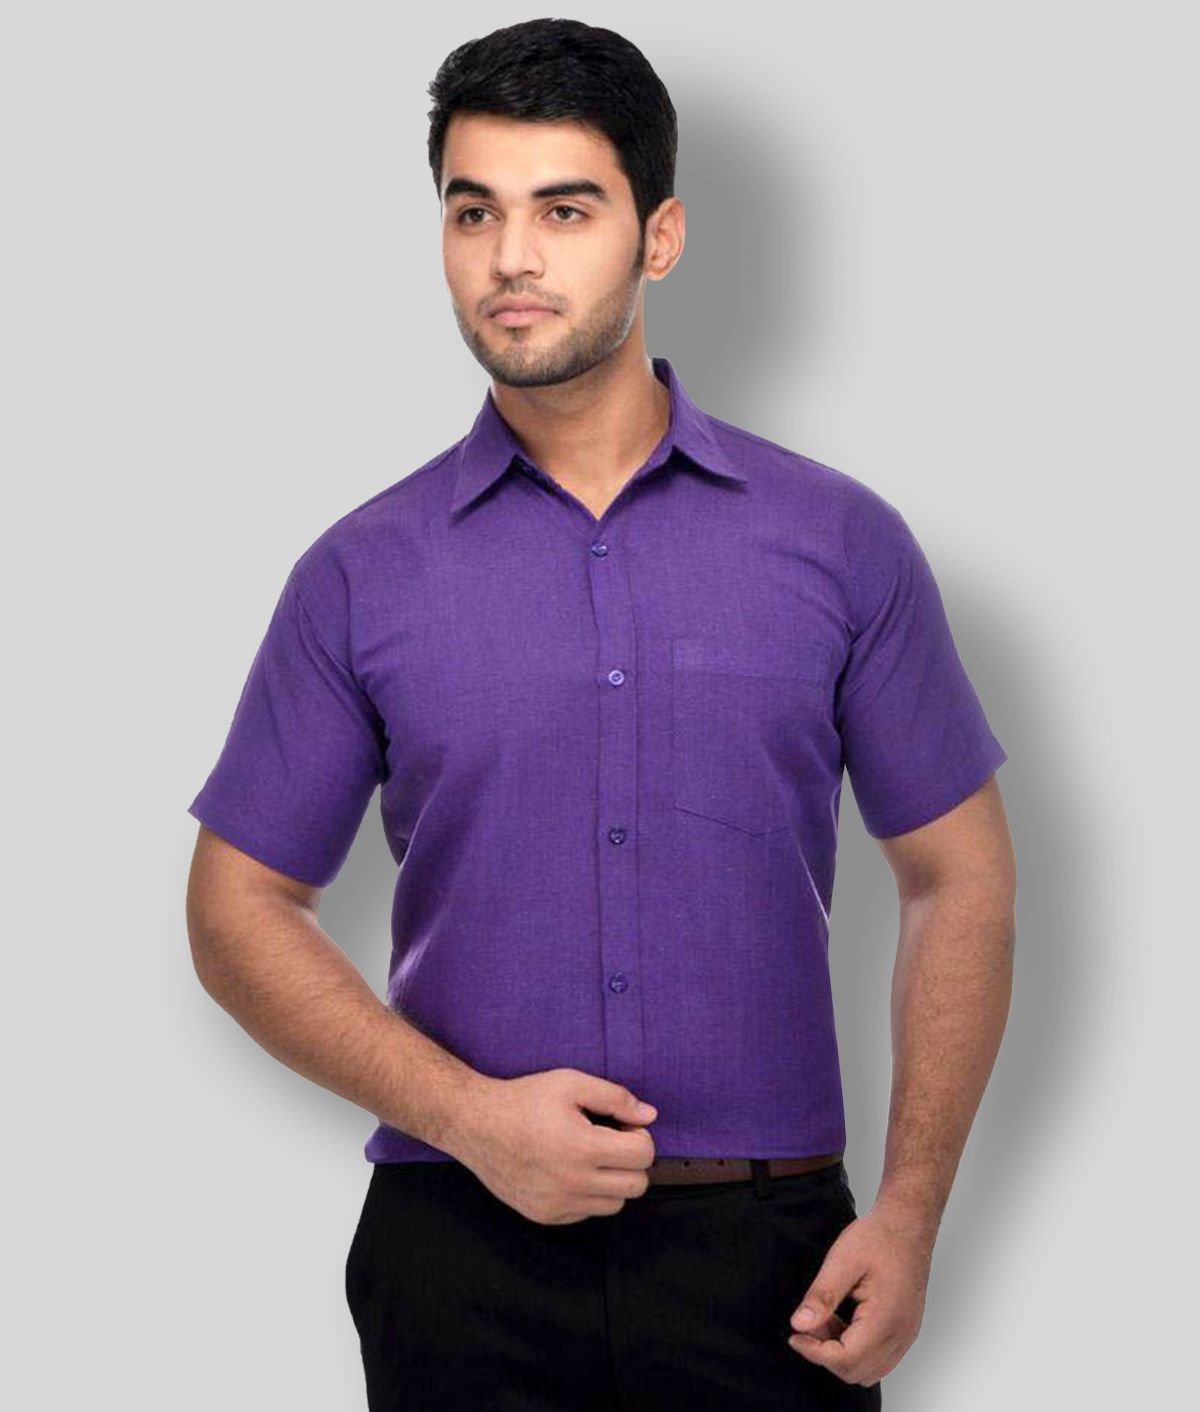     			DESHBANDHU DBK - Purple Cotton Regular Fit Men's Formal Shirt (Pack of 1)